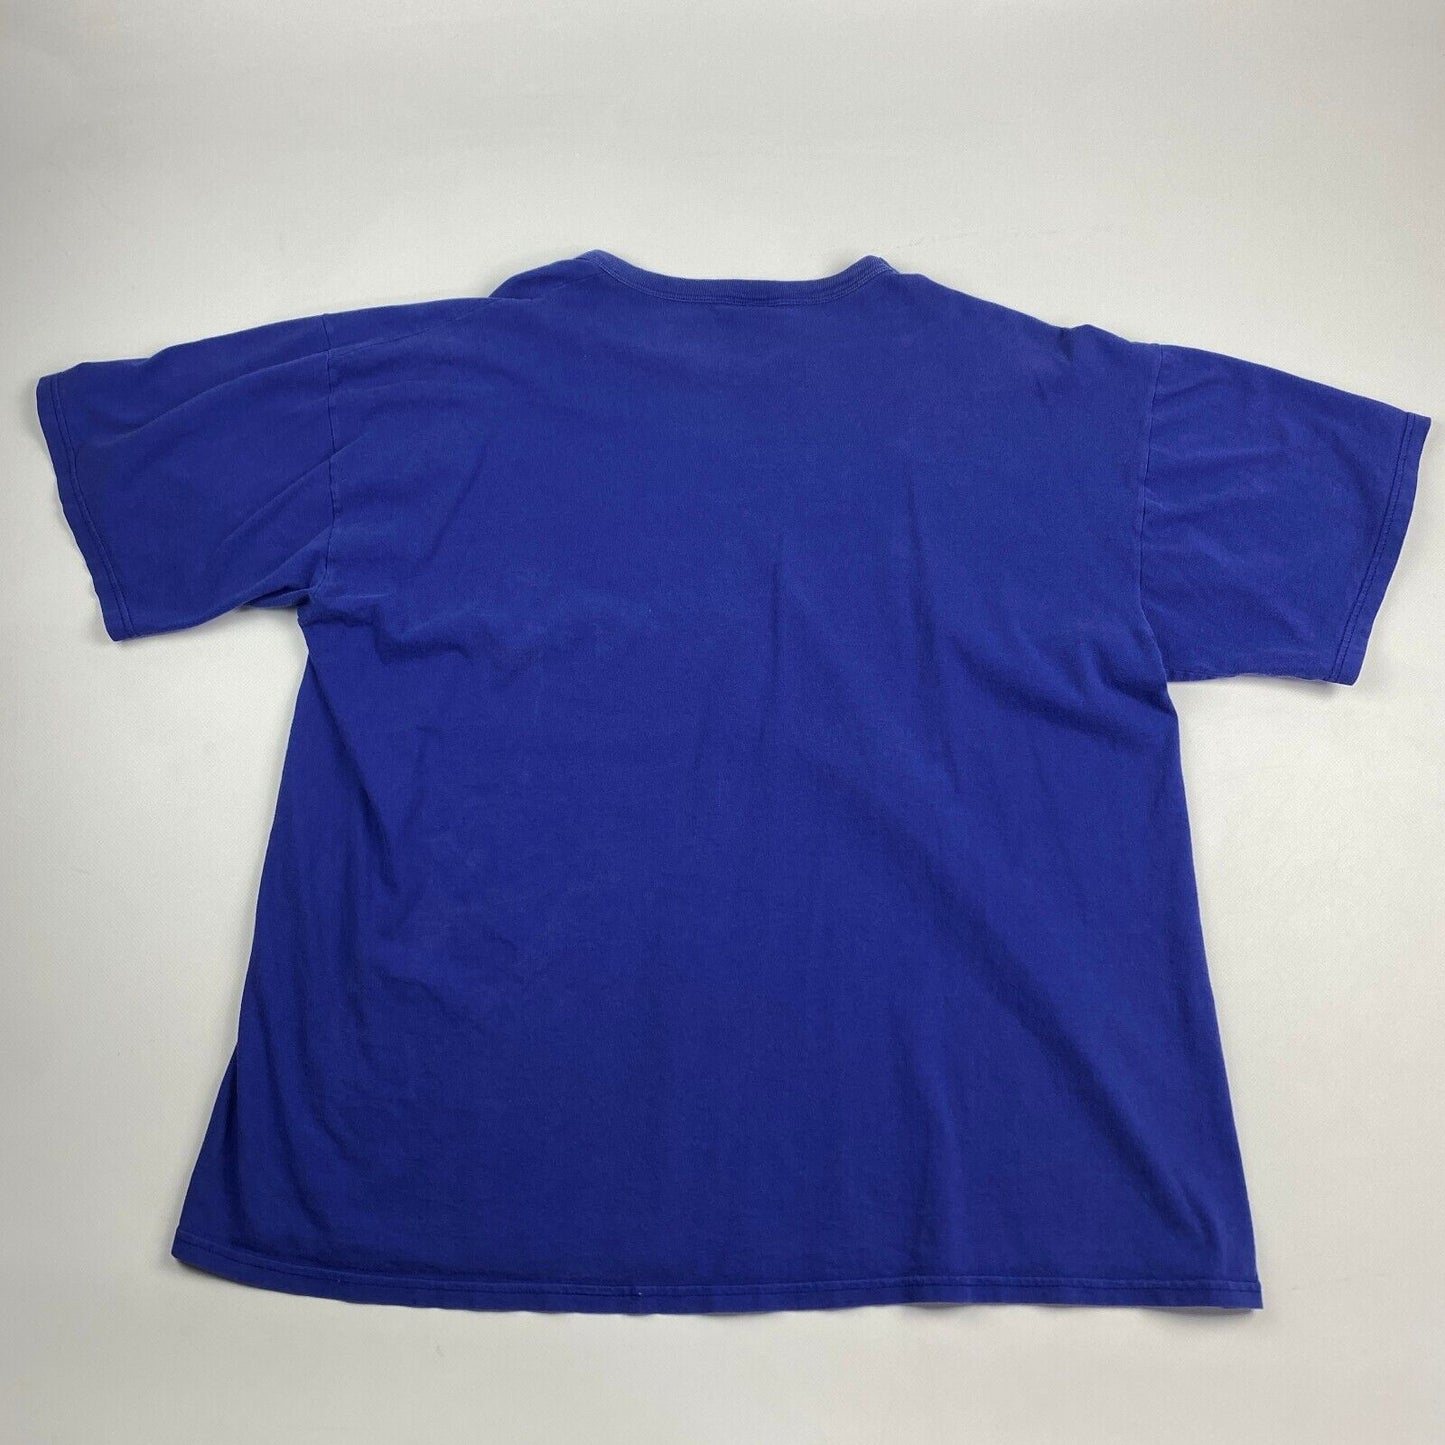 VINTAGE 90s Russell Athletic Blank Blue T-Shirt sz XL Men